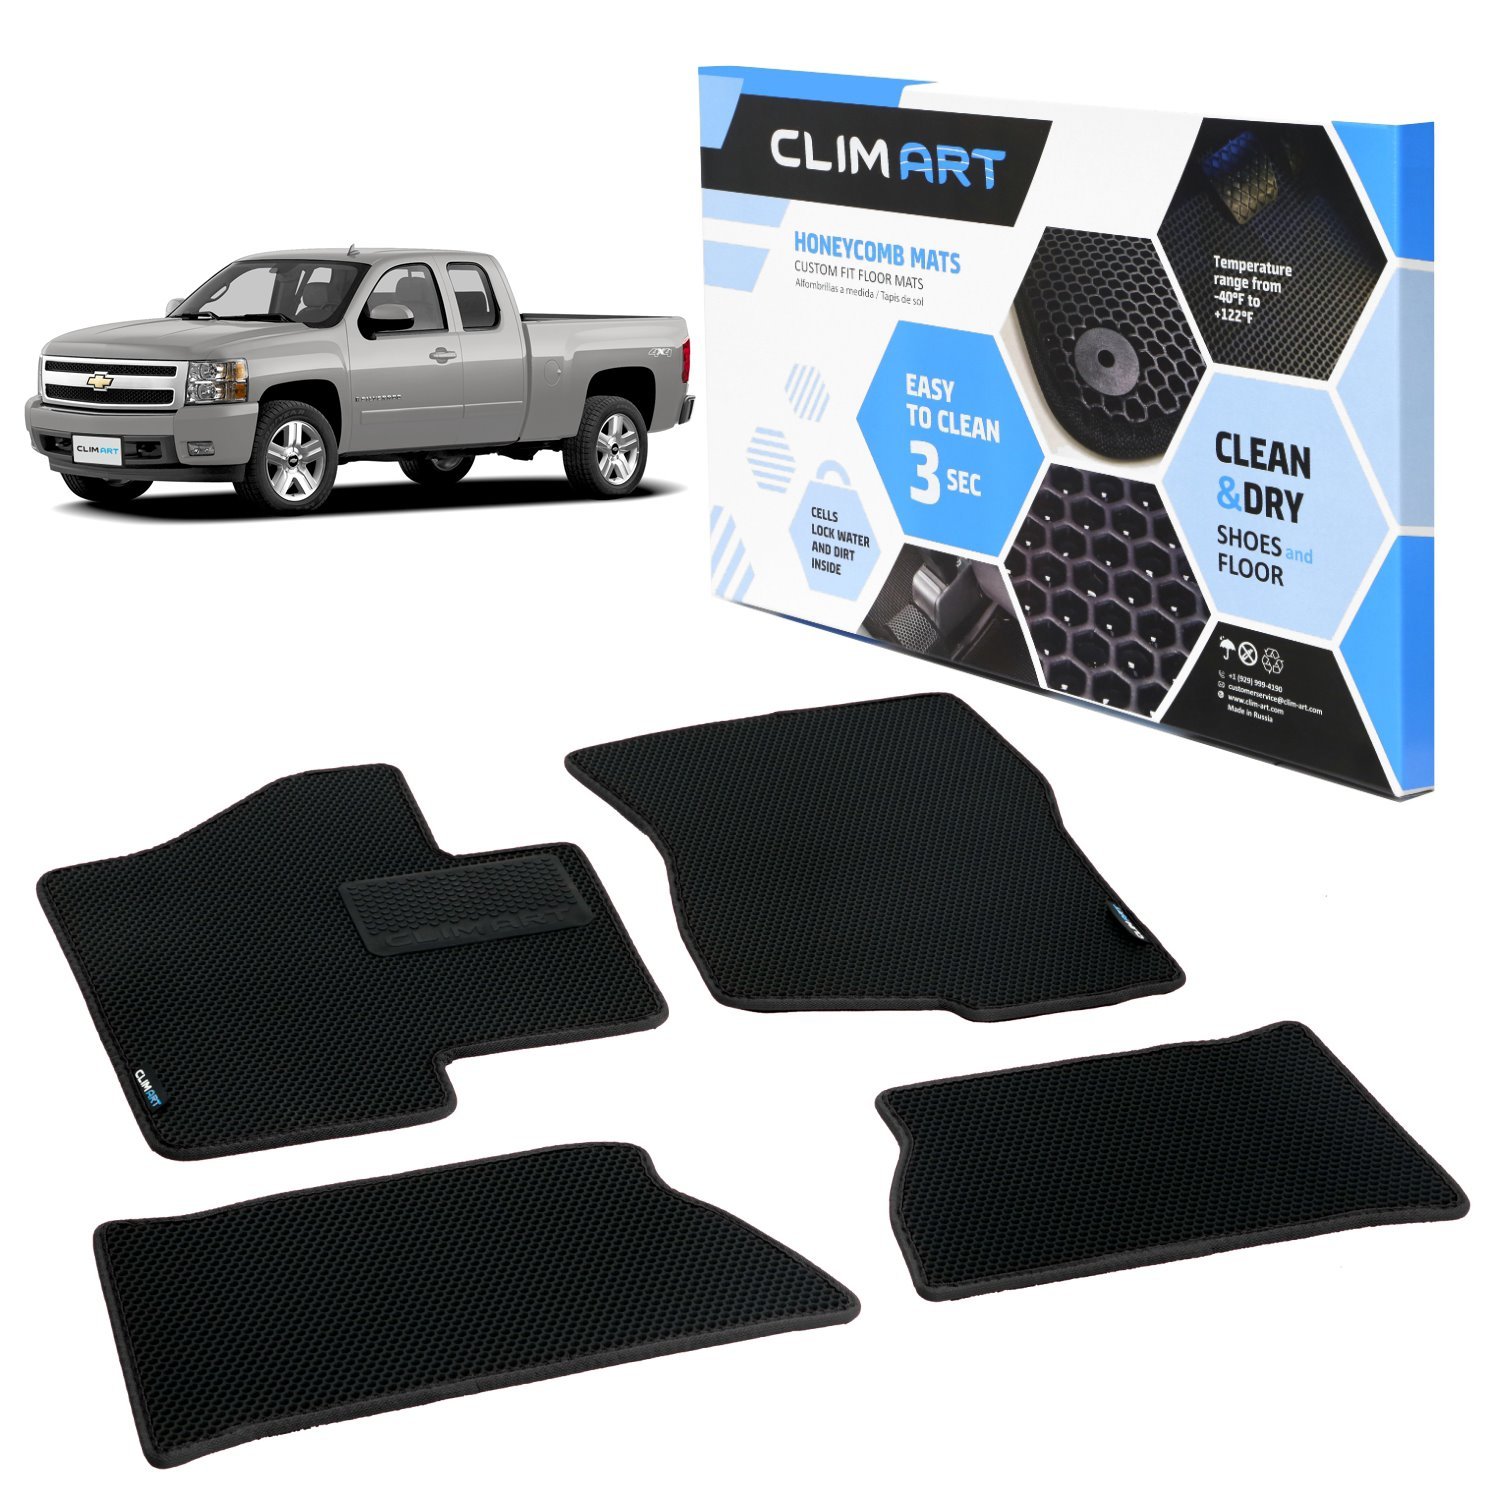 CLIM ART Honeycomb Custom Fit Floor Mats for 2007-2013 Chevrolet Silverado/GMC Sierra 1500 Extended Cab